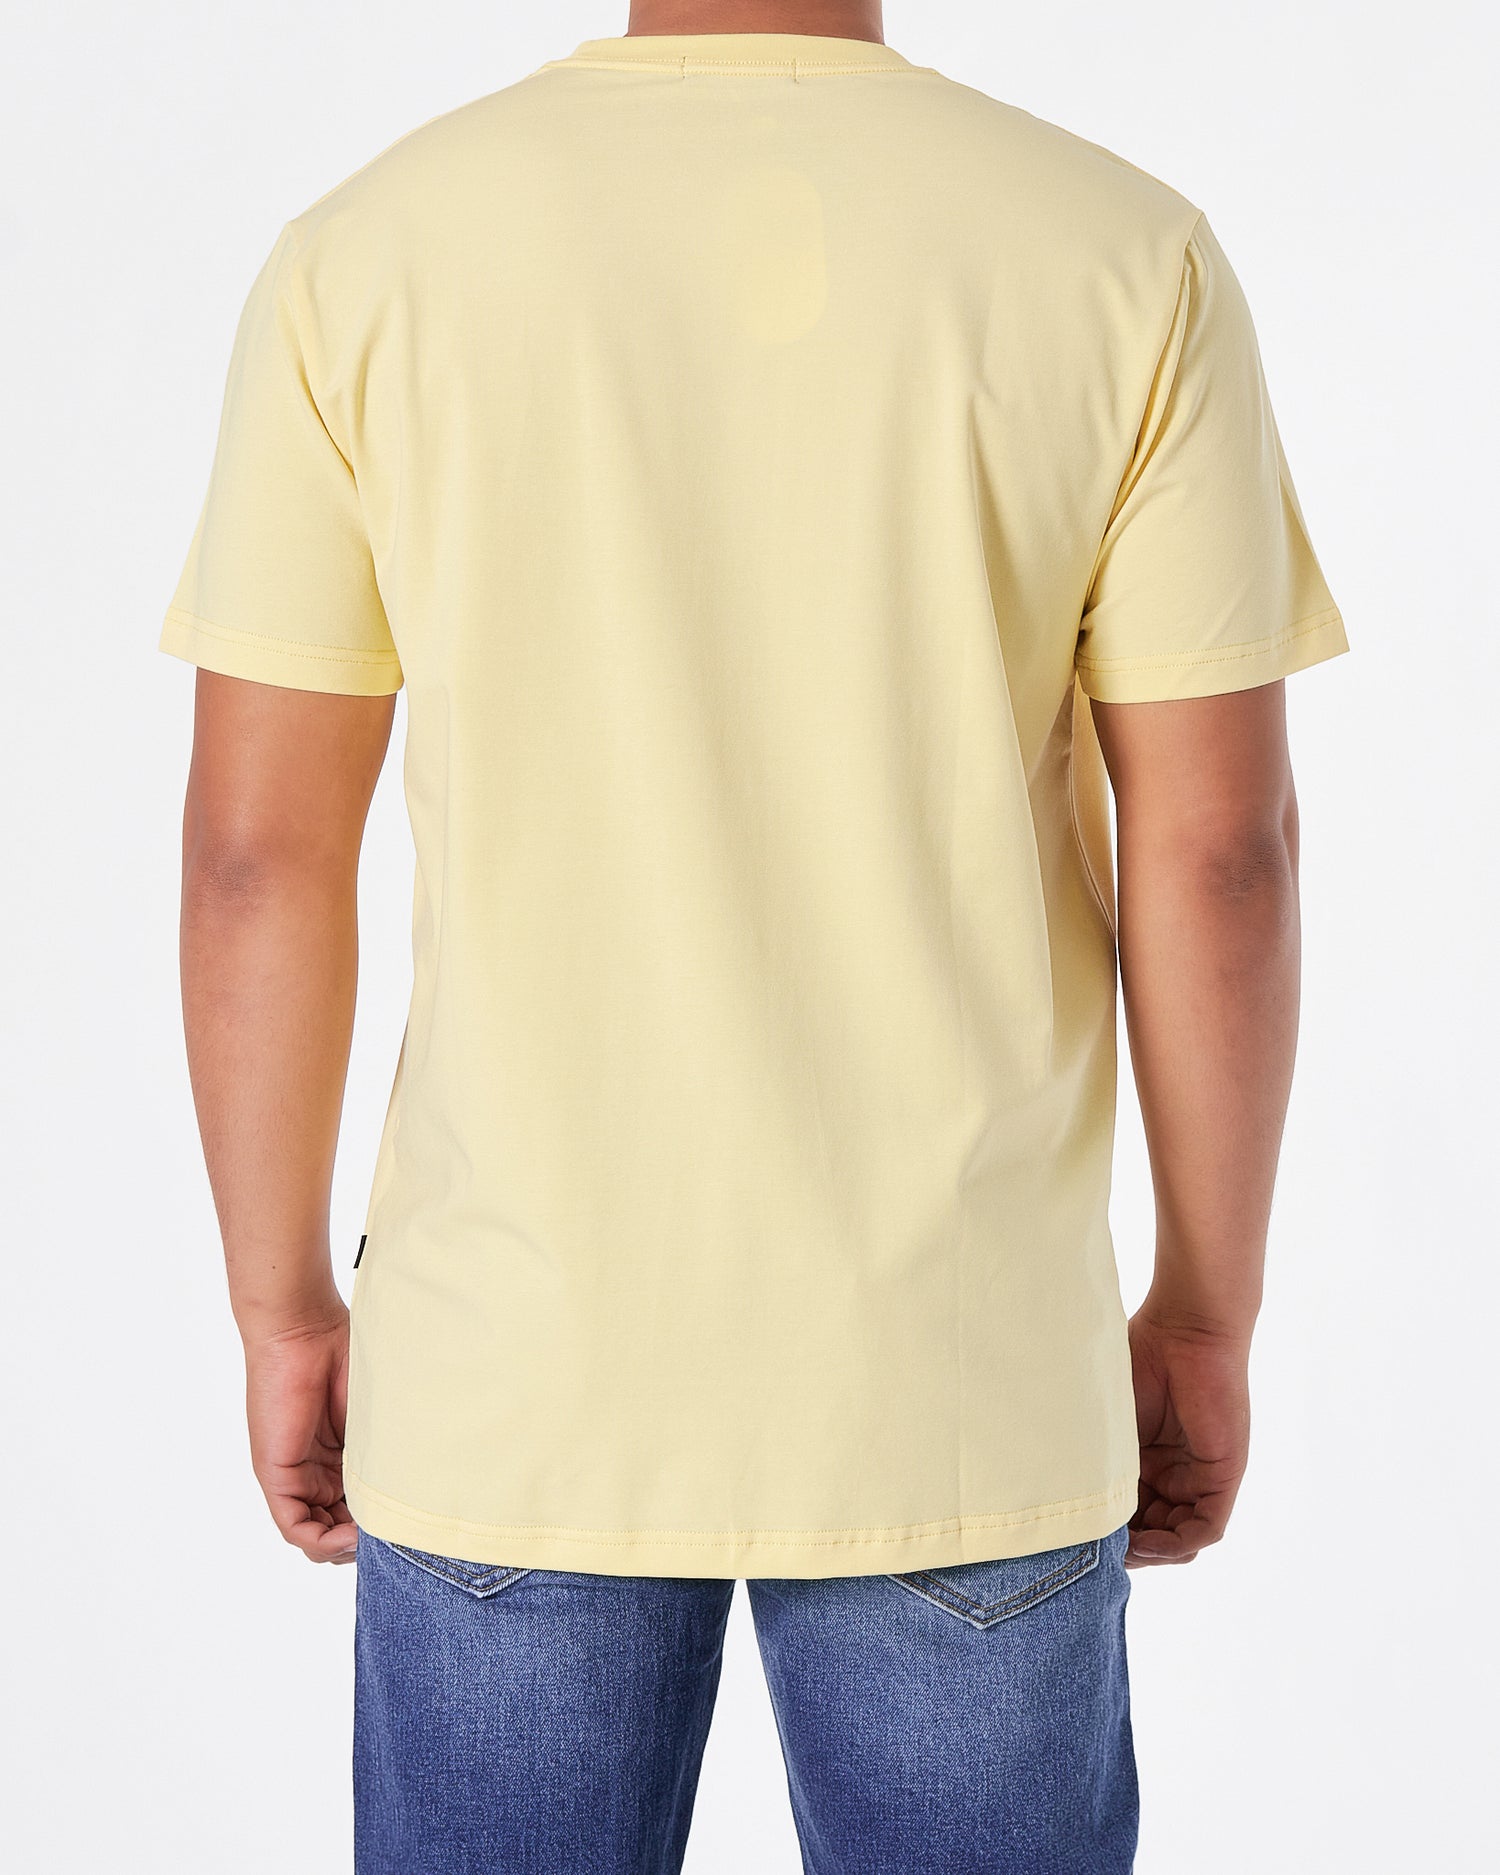 MAL Cartoon Embroidered Men Yellow T-Shirt 16.90